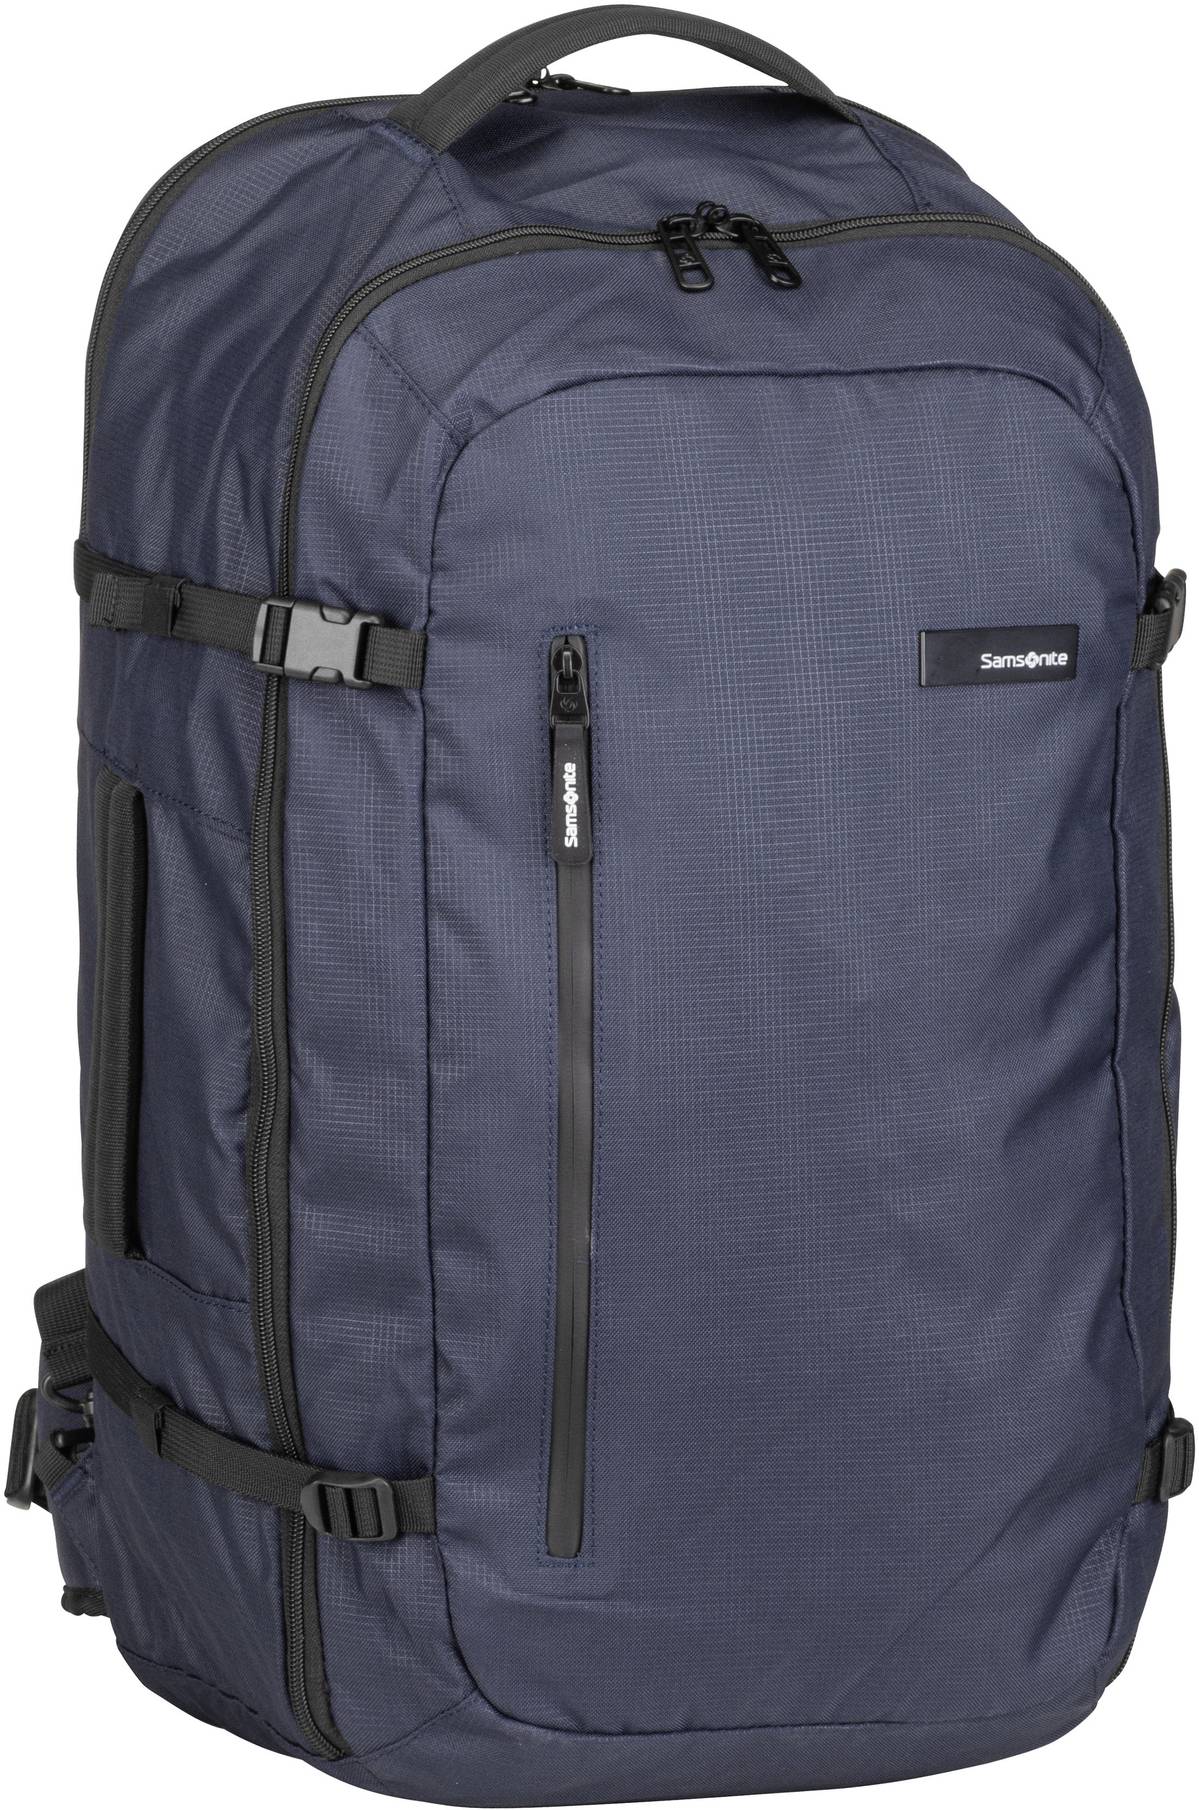 Samsonite Roader Travel Backpack M 55L  in Dark Blue (55 Liter), Rucksack / Backpack